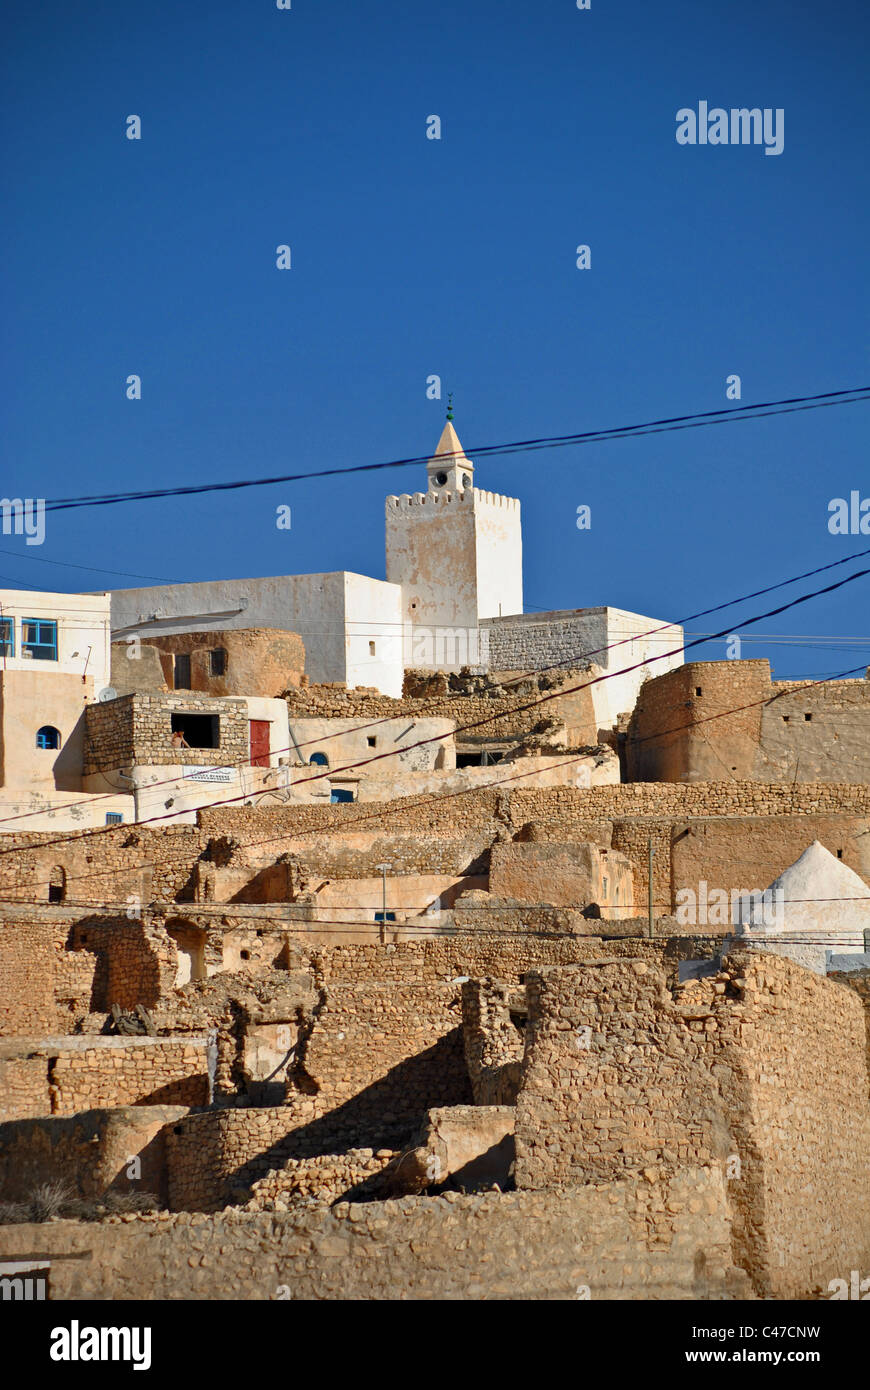 Hilltop village in southern Tunisia Stock Photo